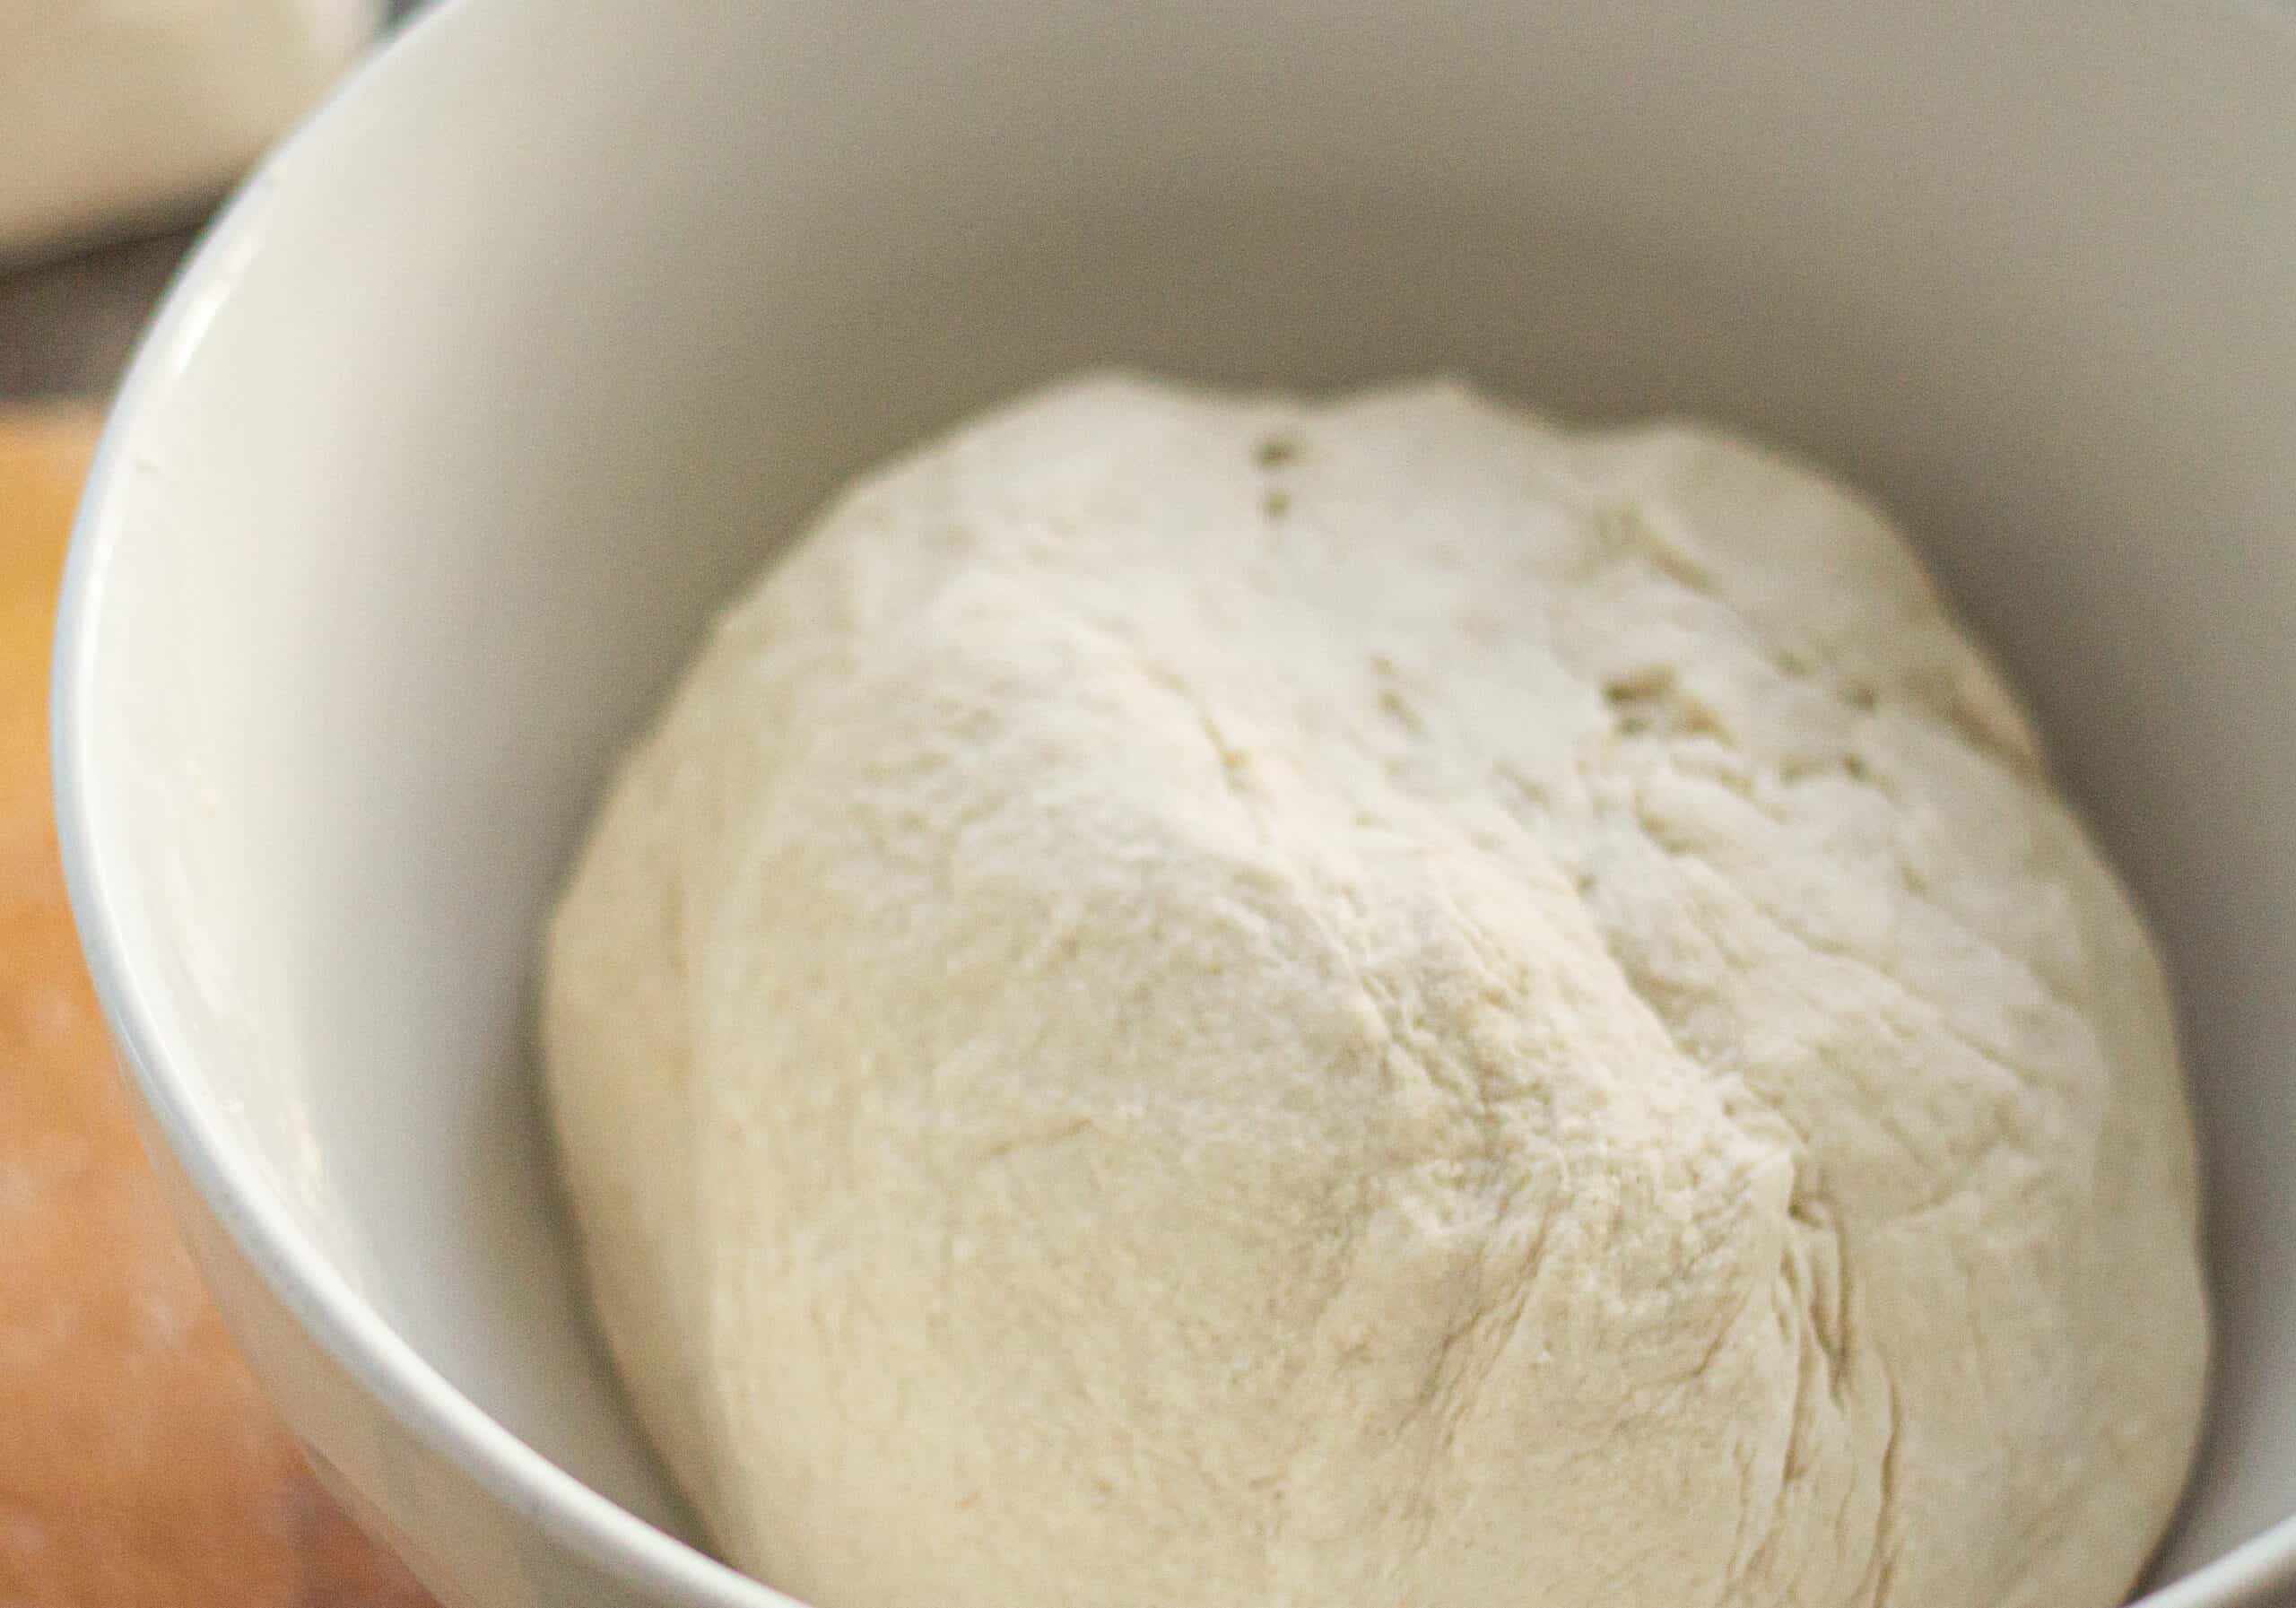 A kneaded dough ball